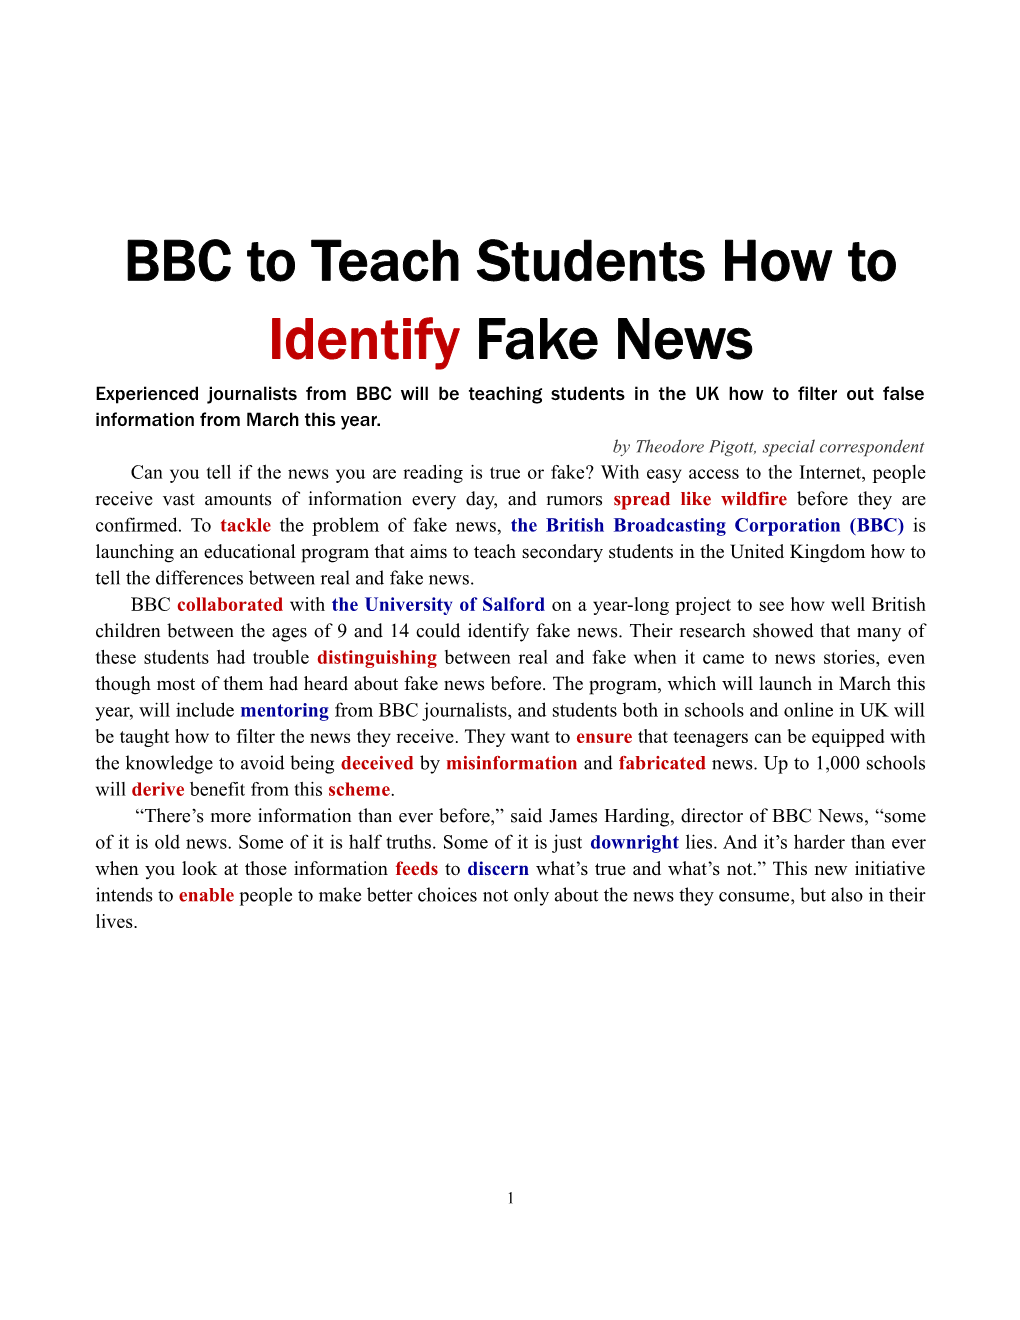 BBC to Teach Students How to Identifyfake News